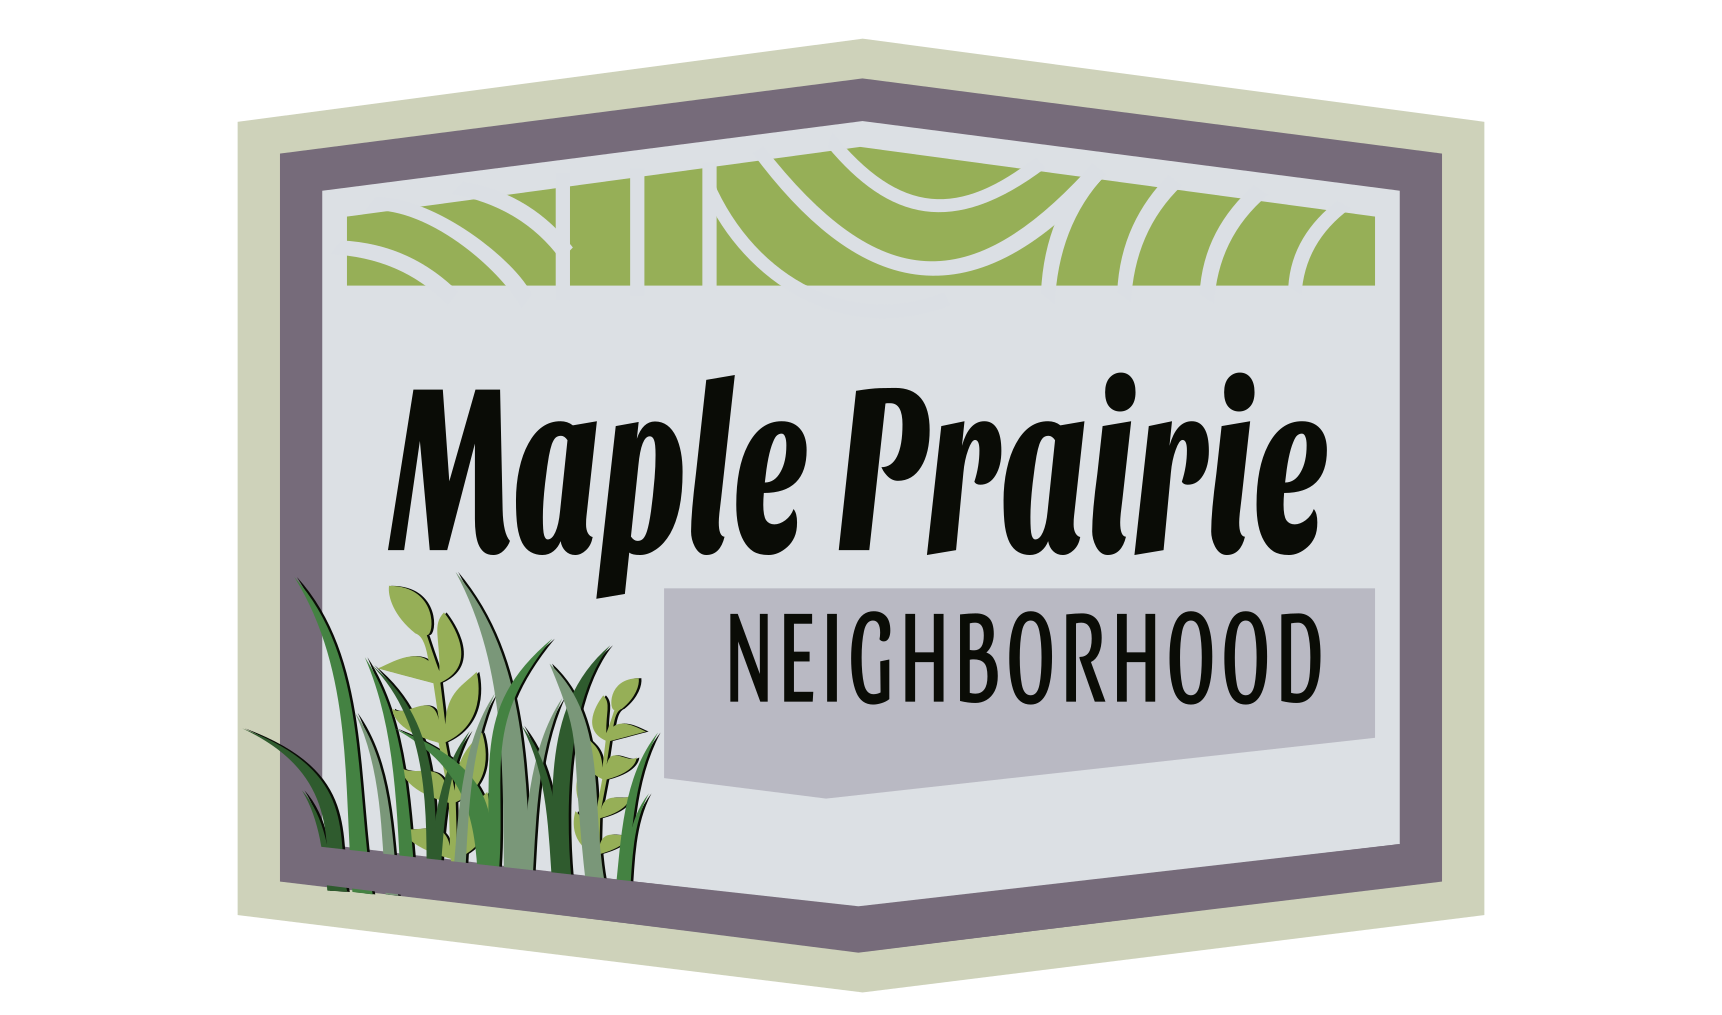 Maple-Prairie Neighborhood Has Family Appeal